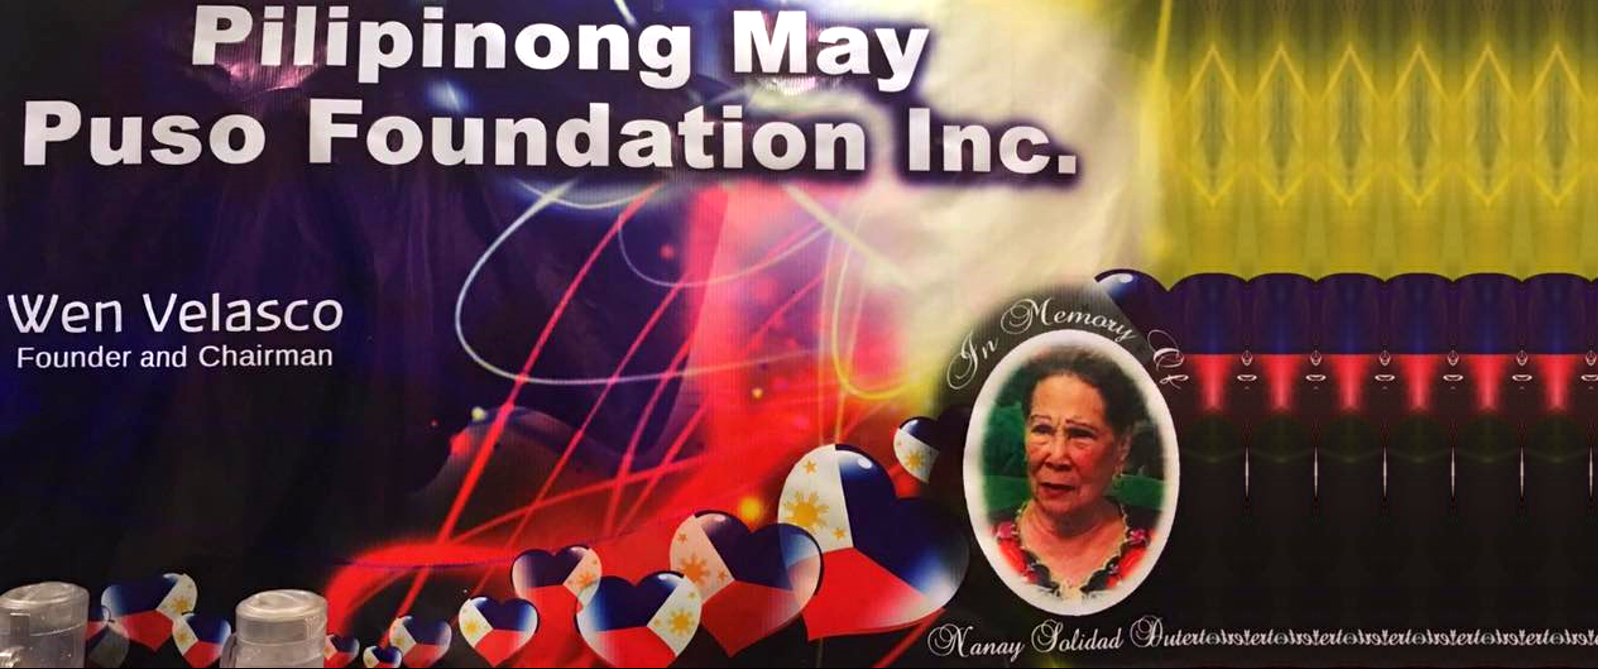 Nanay Solidad Roa-Duterte, An Inspiration